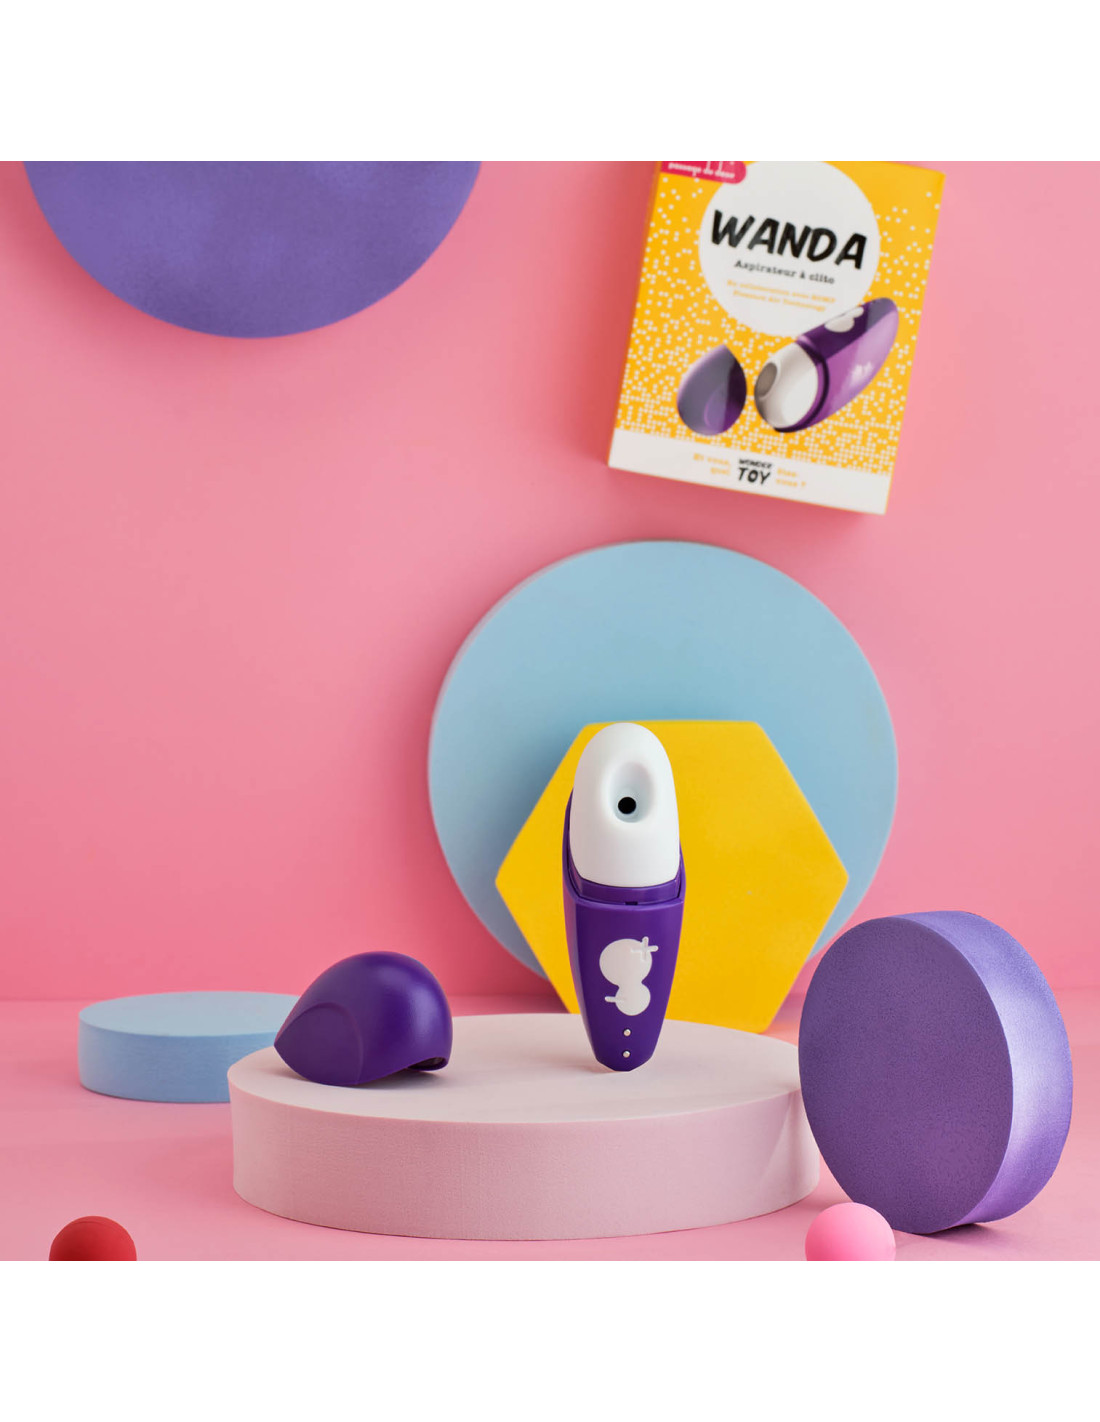 Wondertoy Wanda stimulateur sans contact oKpOW60s